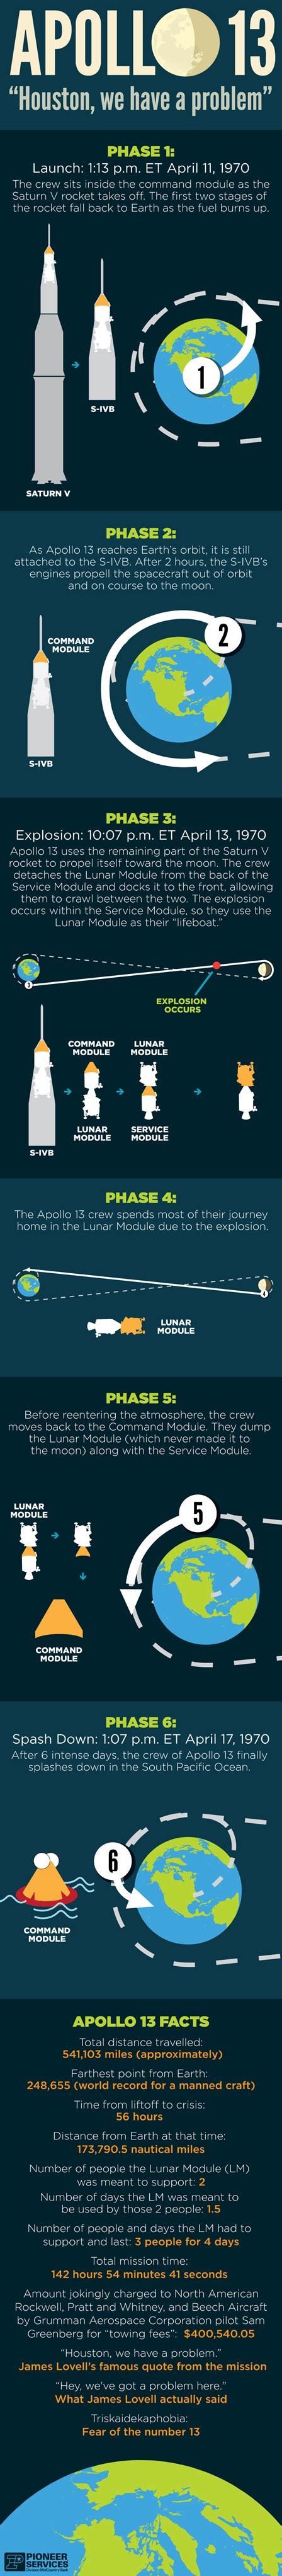 Apollo 13 Houston We Have A Problem Visually